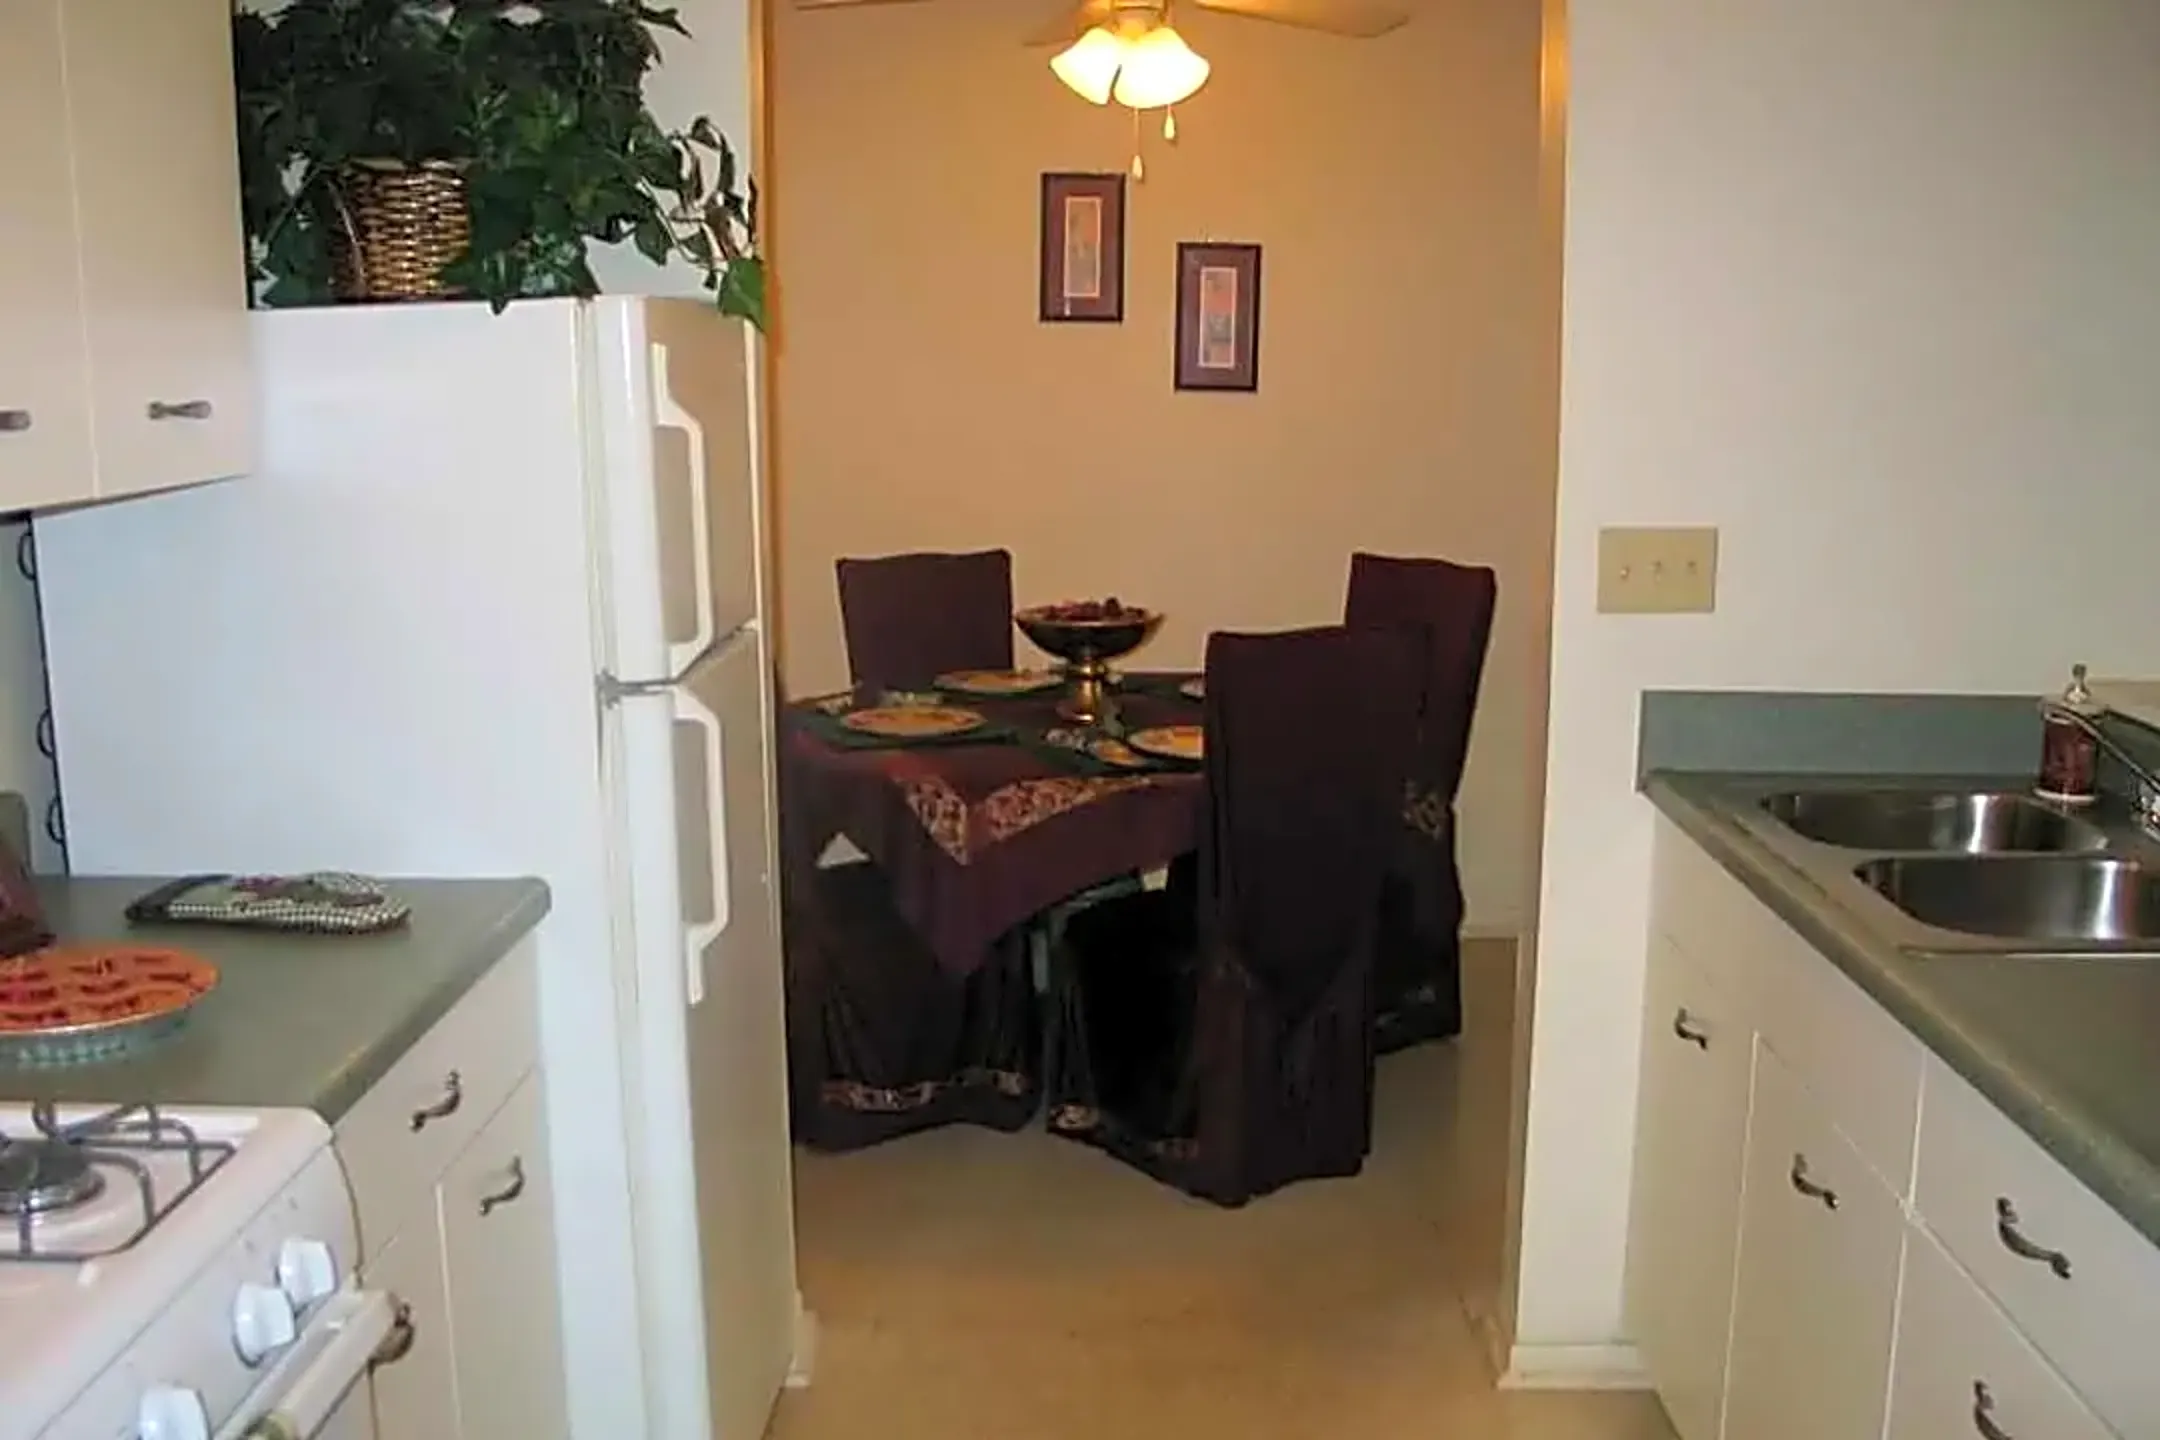 Dining Room - 2340 Sunburst Blvd - Evansville, IN